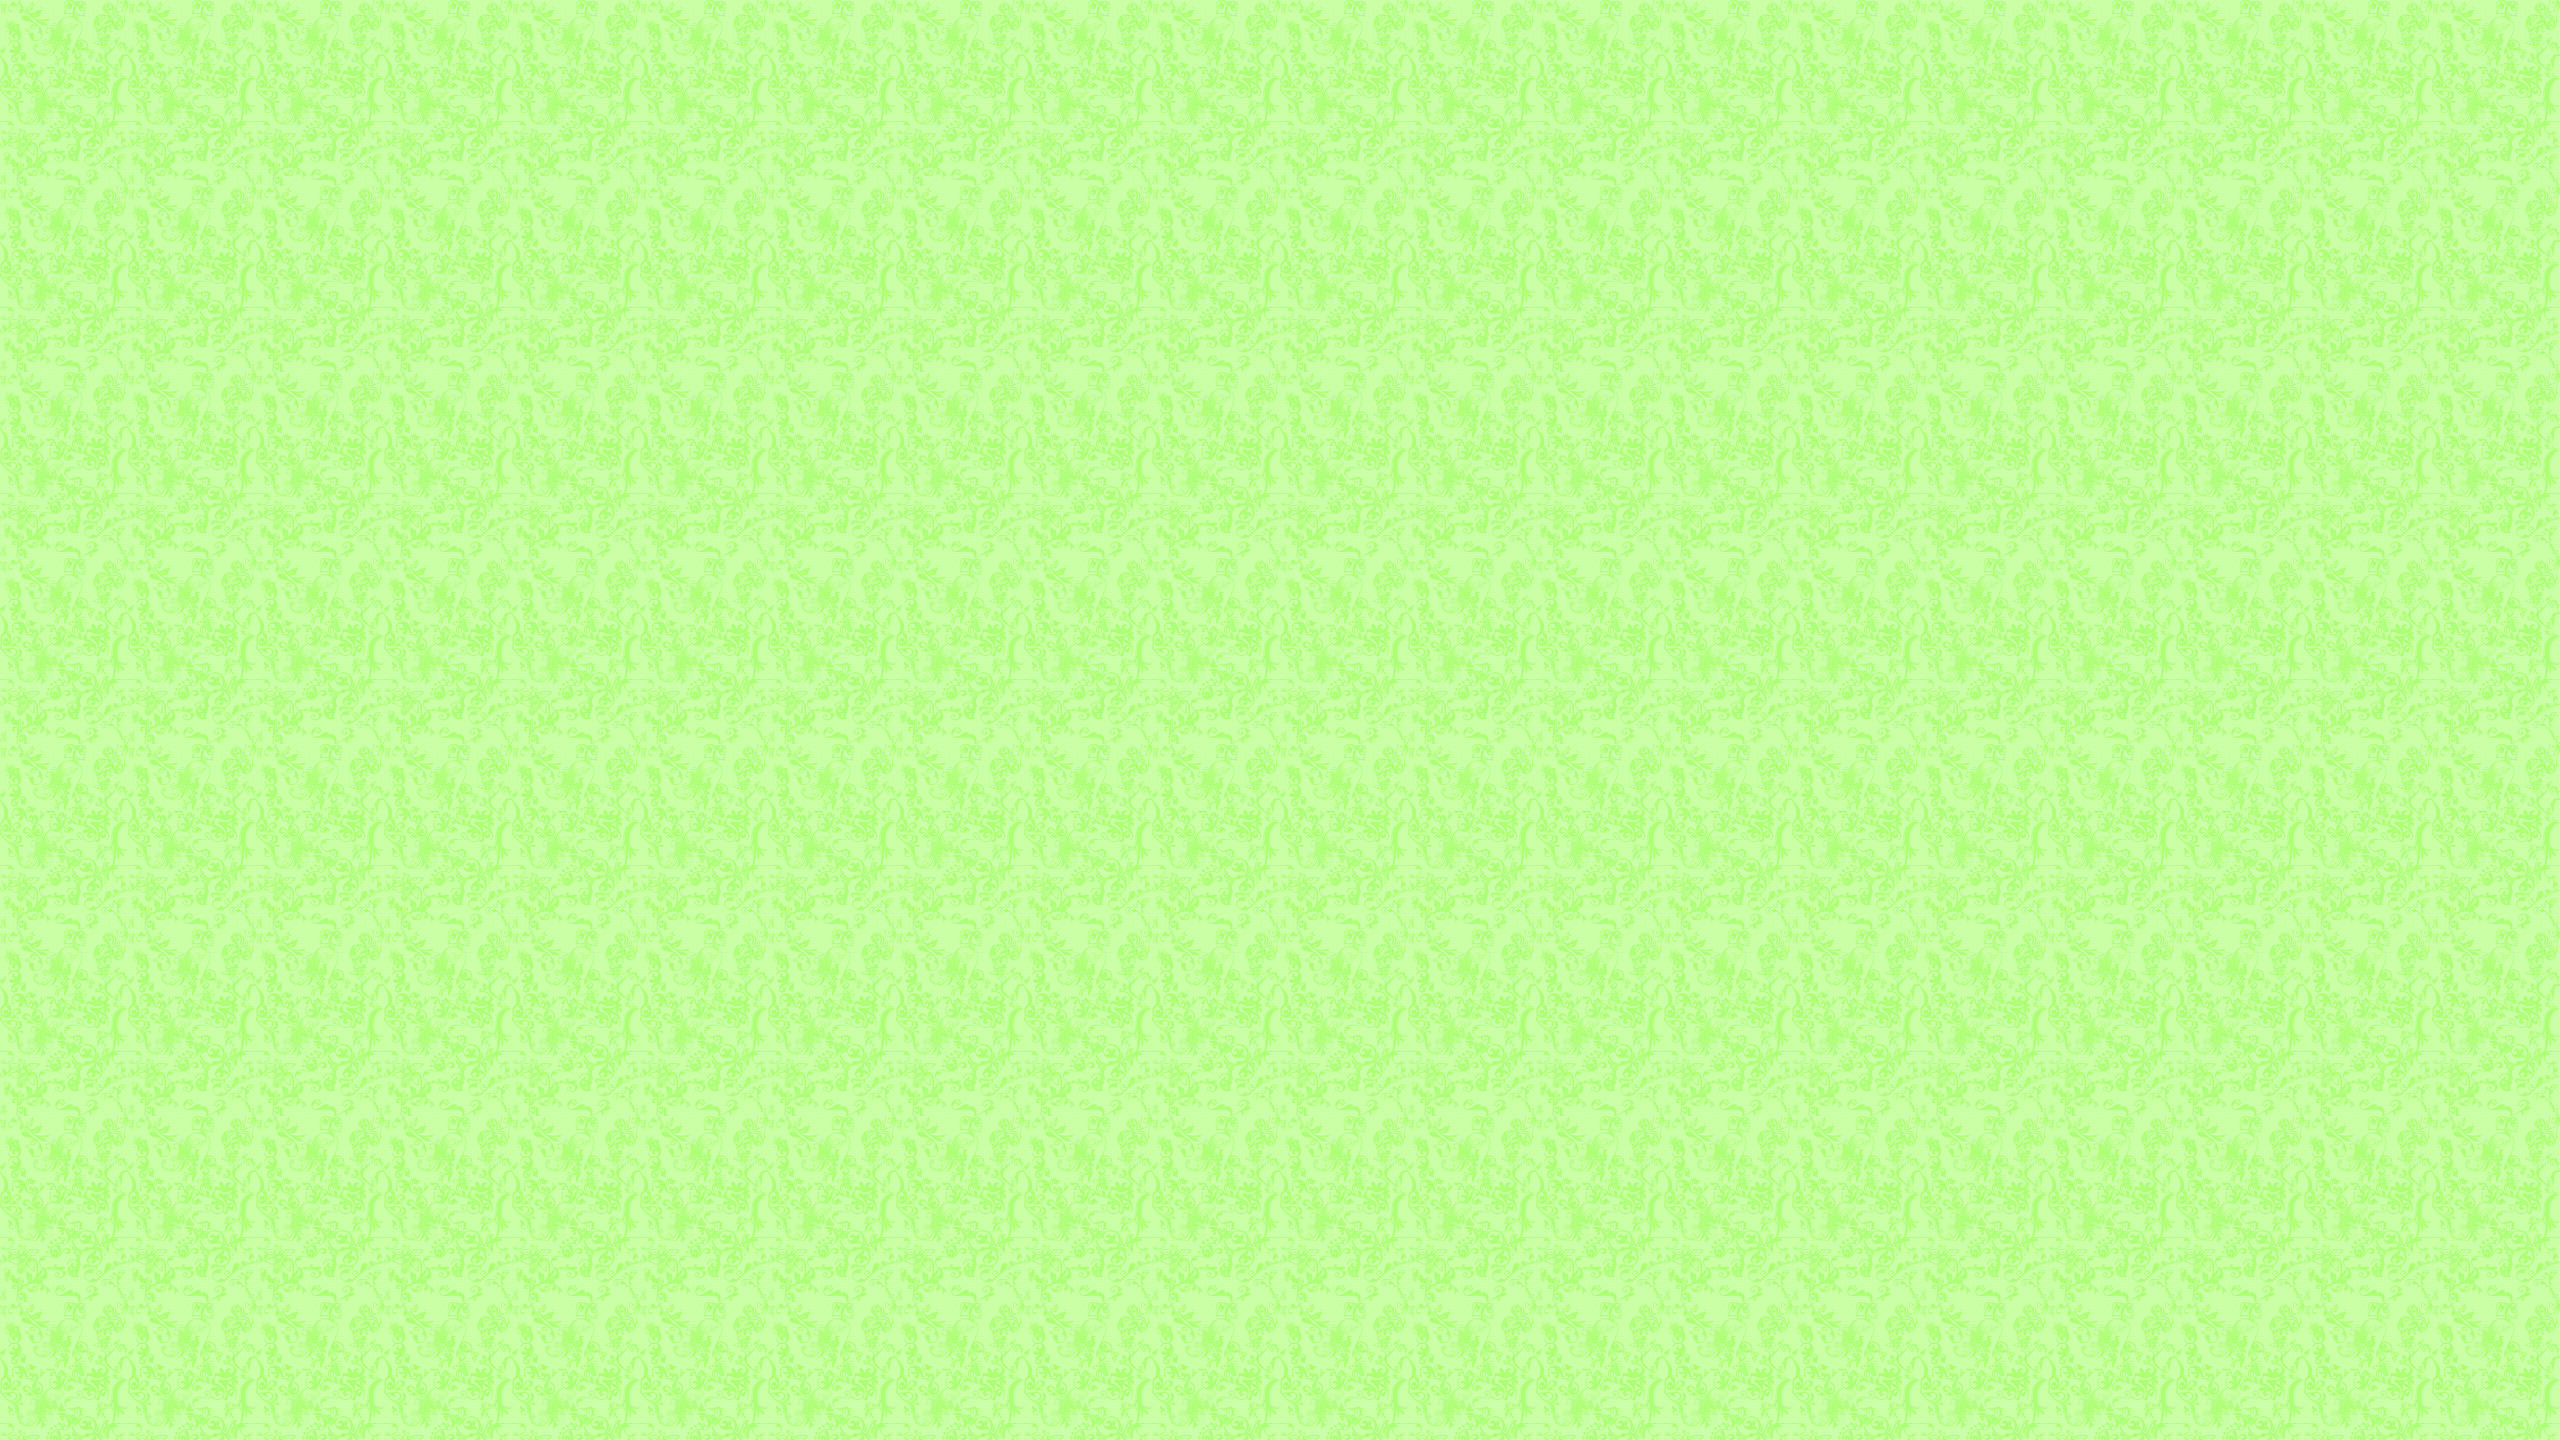 2560x1440 HD Lime Green Backgrounds Wallpapercra Â· 86 Â· Download Â· Wallpapers ...